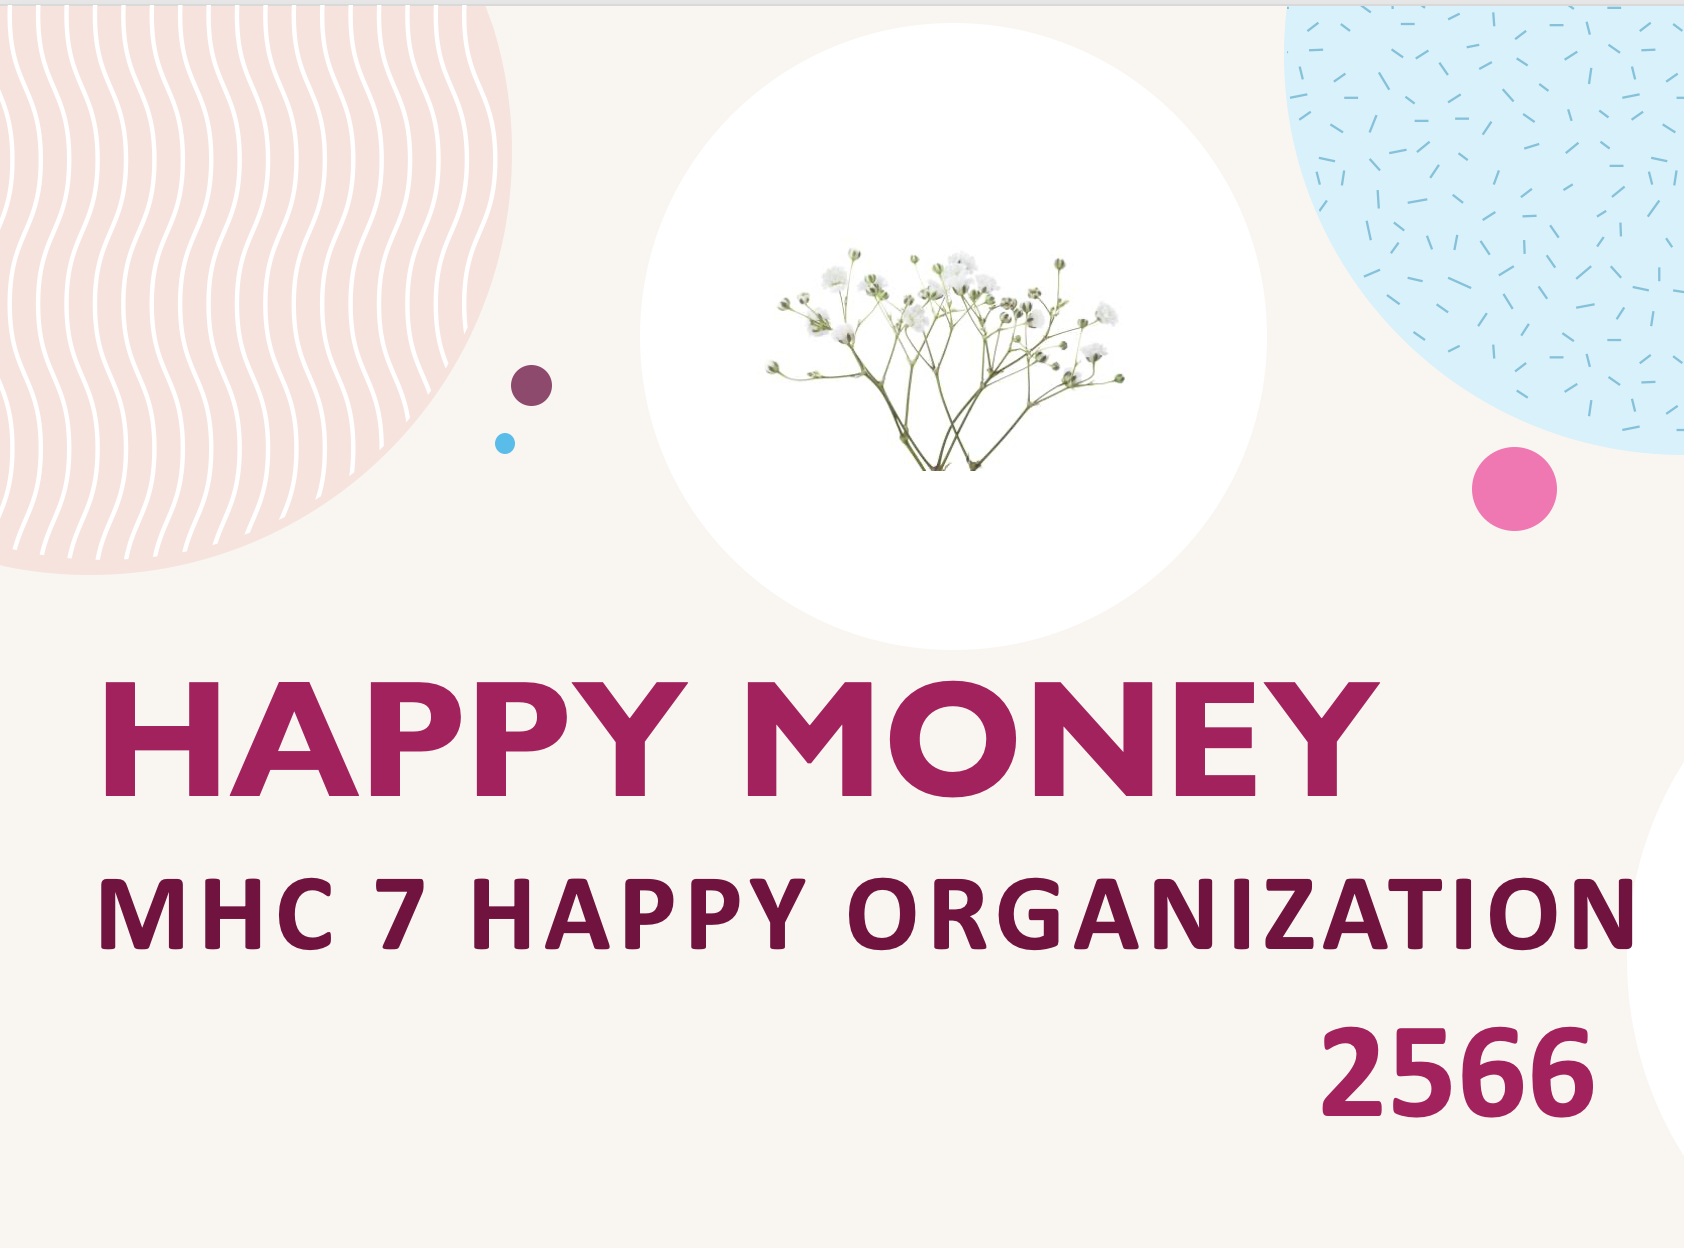 HAPPY MONEY MHC 7 HAPPY ORGANIZATION 2566